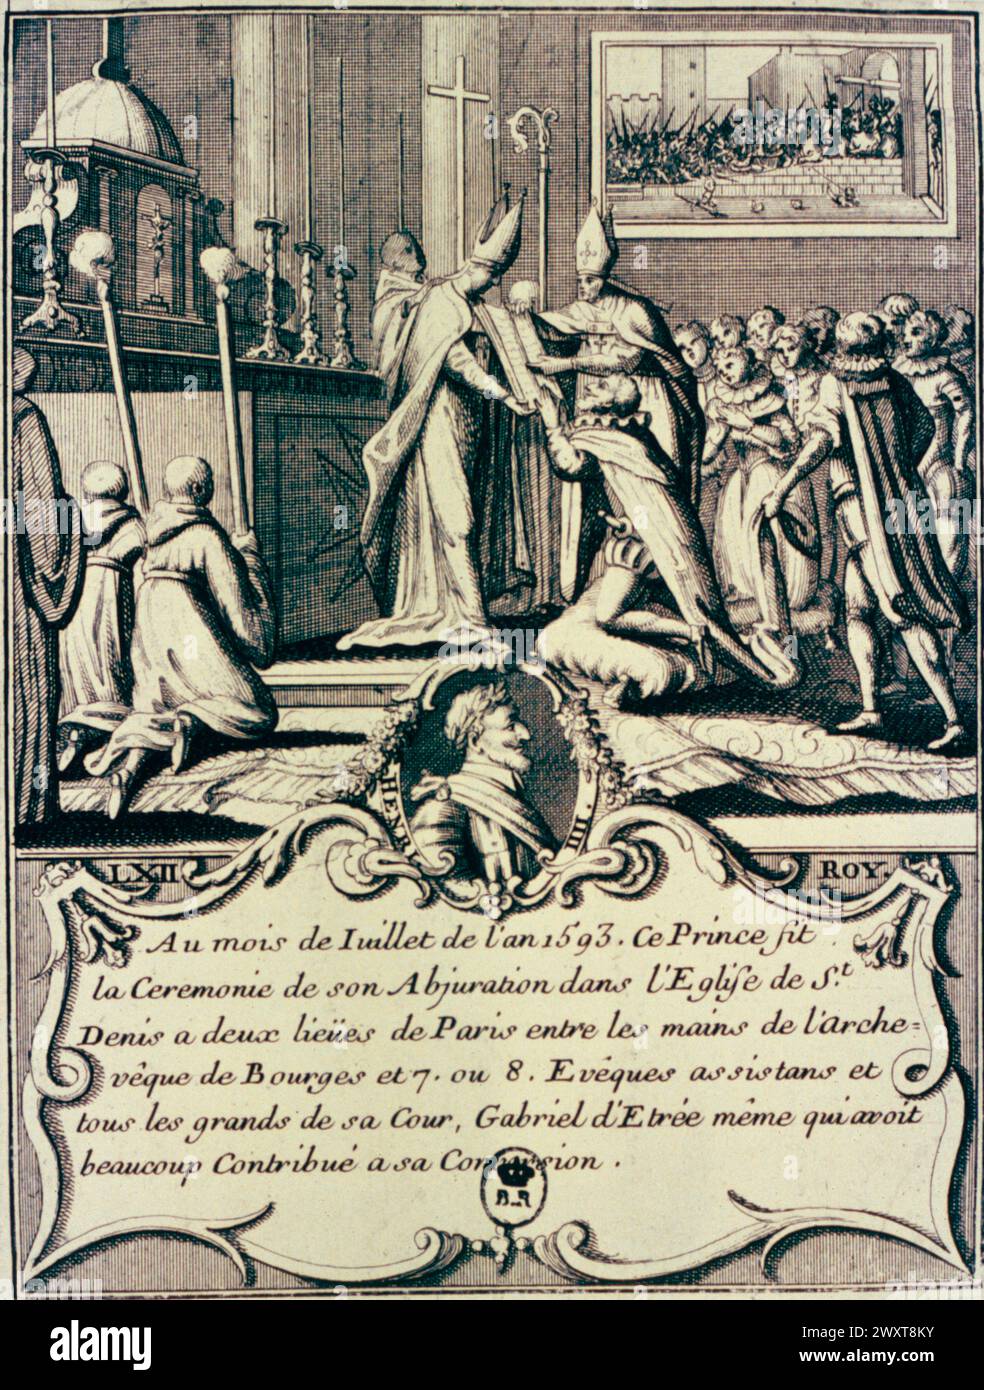 The Abjuration of Henry IV, illustration, St. Denis, France 16th century Stock Photo